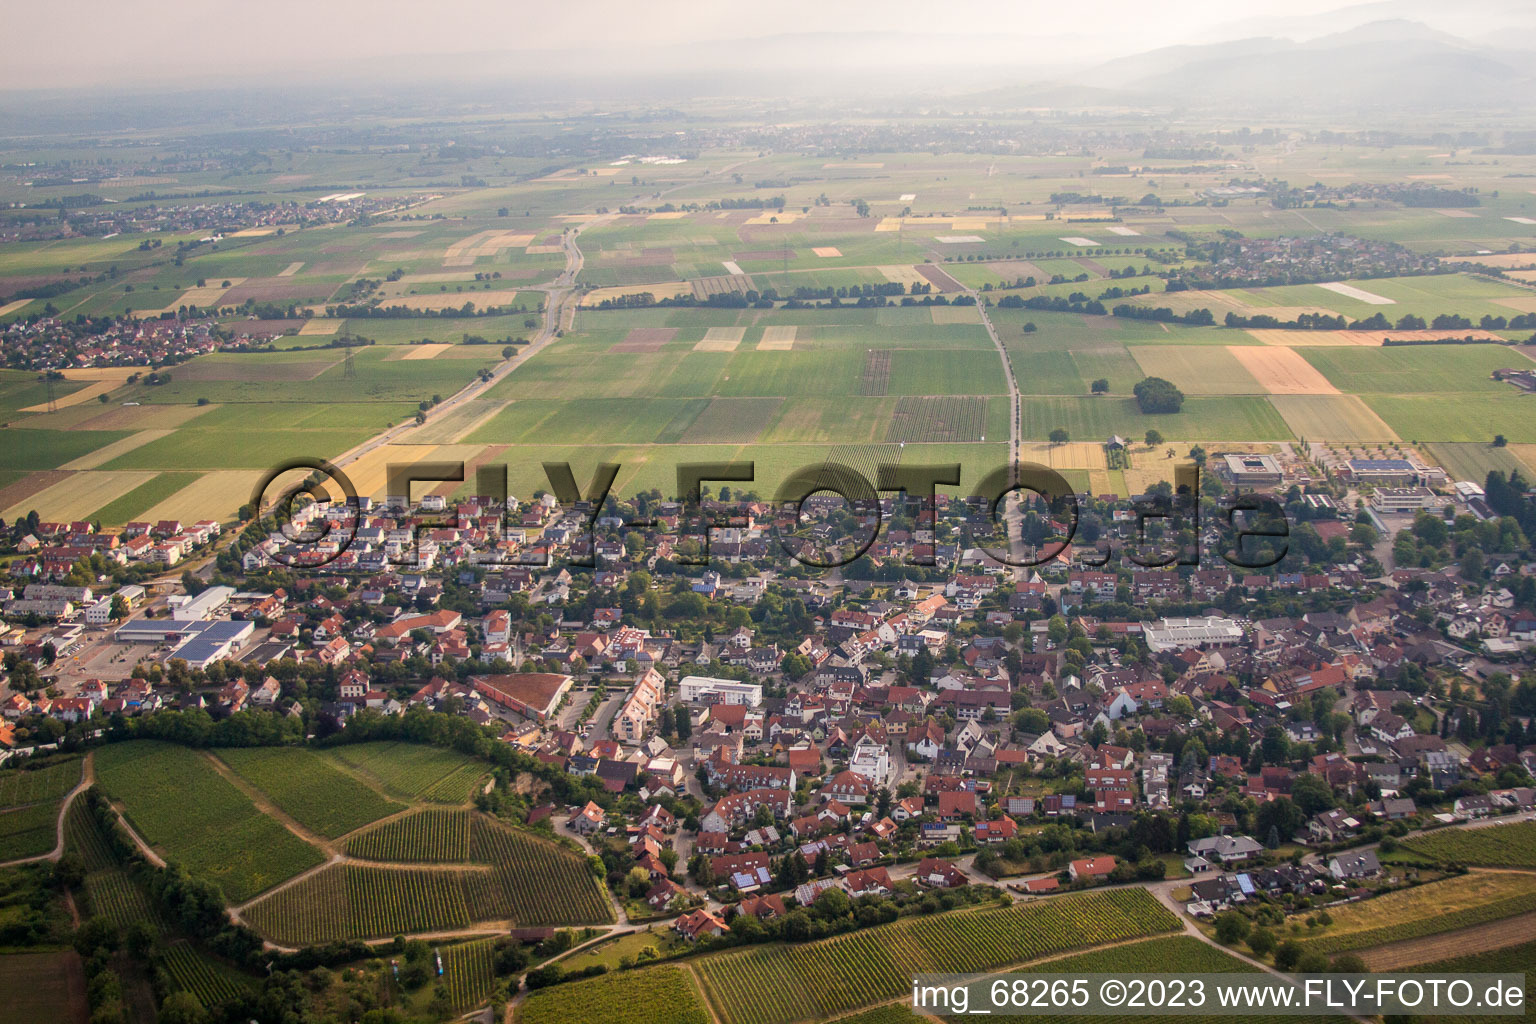 Heitersheim dans le département Bade-Wurtemberg, Allemagne hors des airs